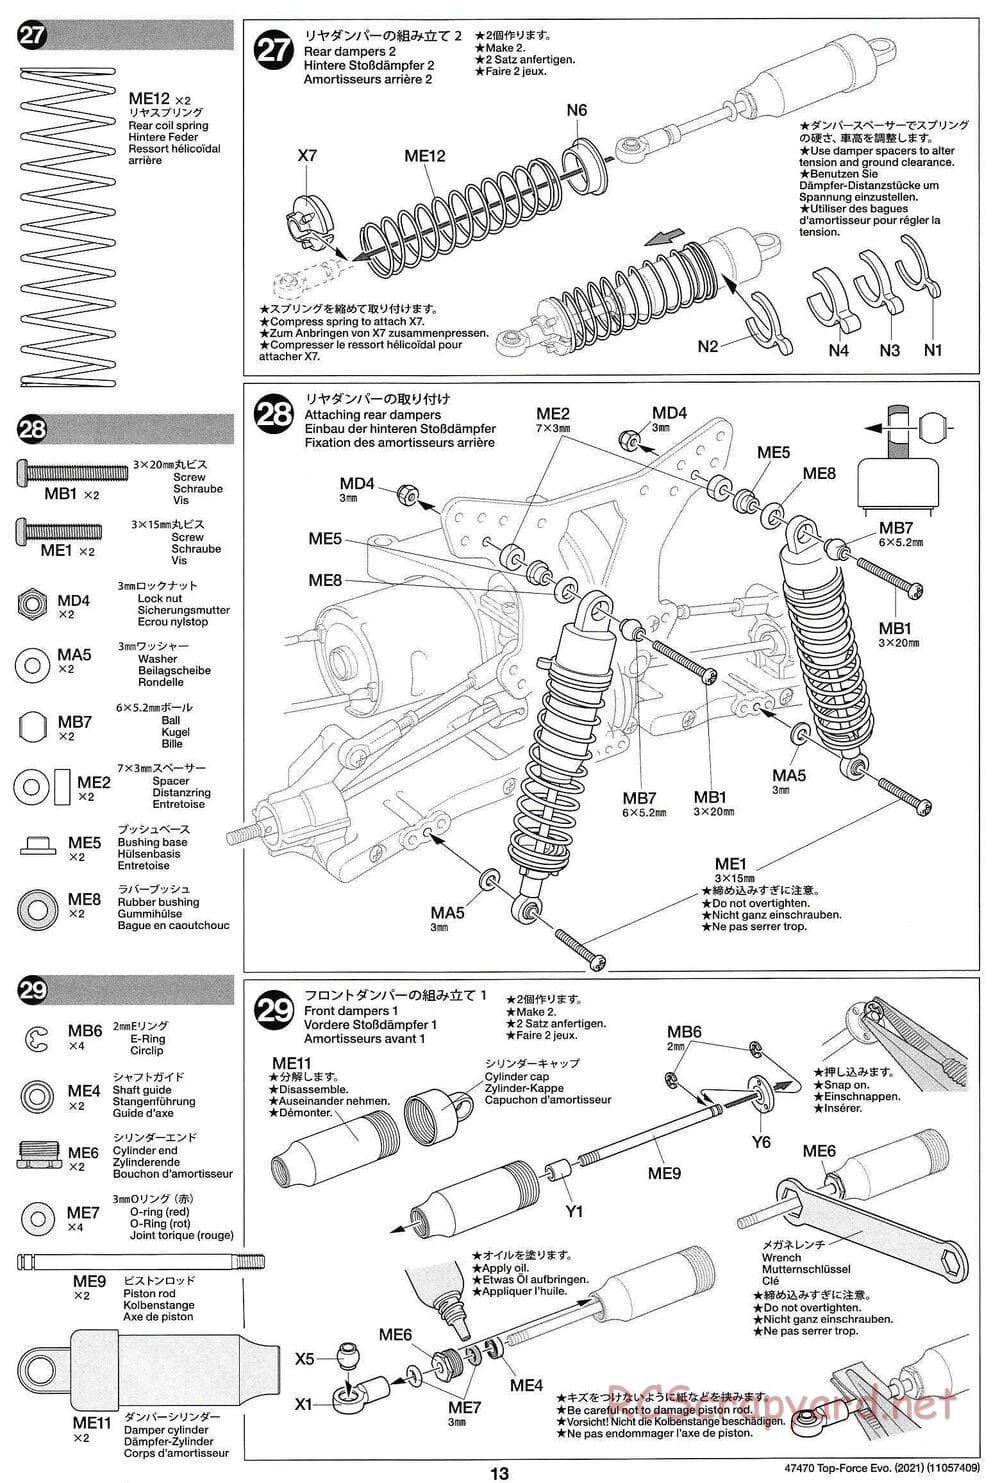 Tamiya - Top Force Evo 2021 - DF-01 Chassis - Manual - Page 13